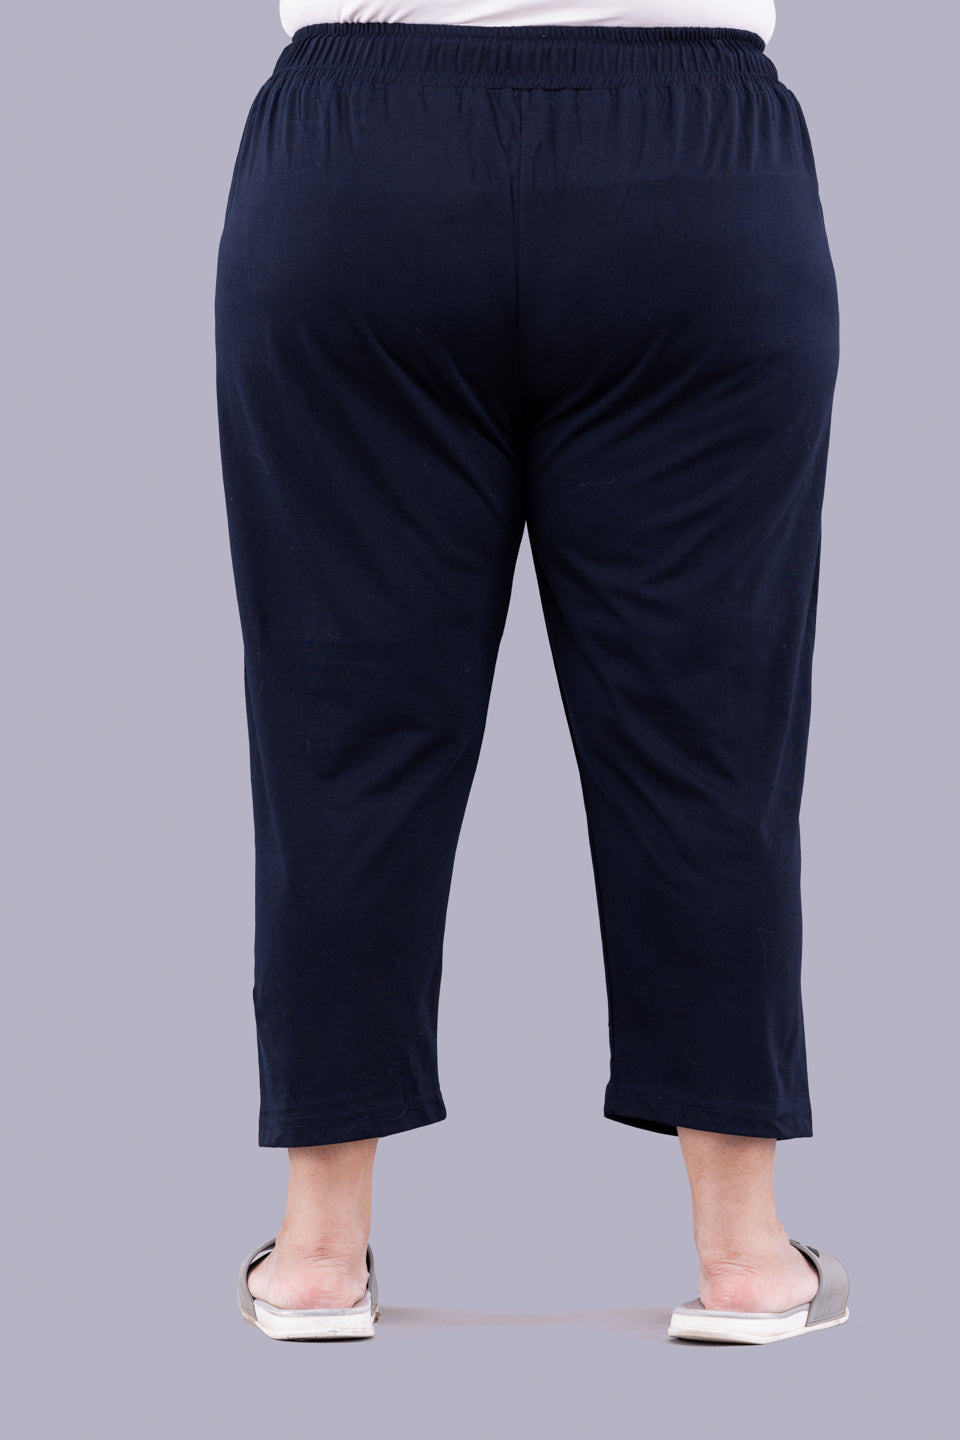 Buy LYRA Womens Super Combed Cotton Elastane Stretch Slim Fit Capri Pants  Ocean Blue at Amazonin